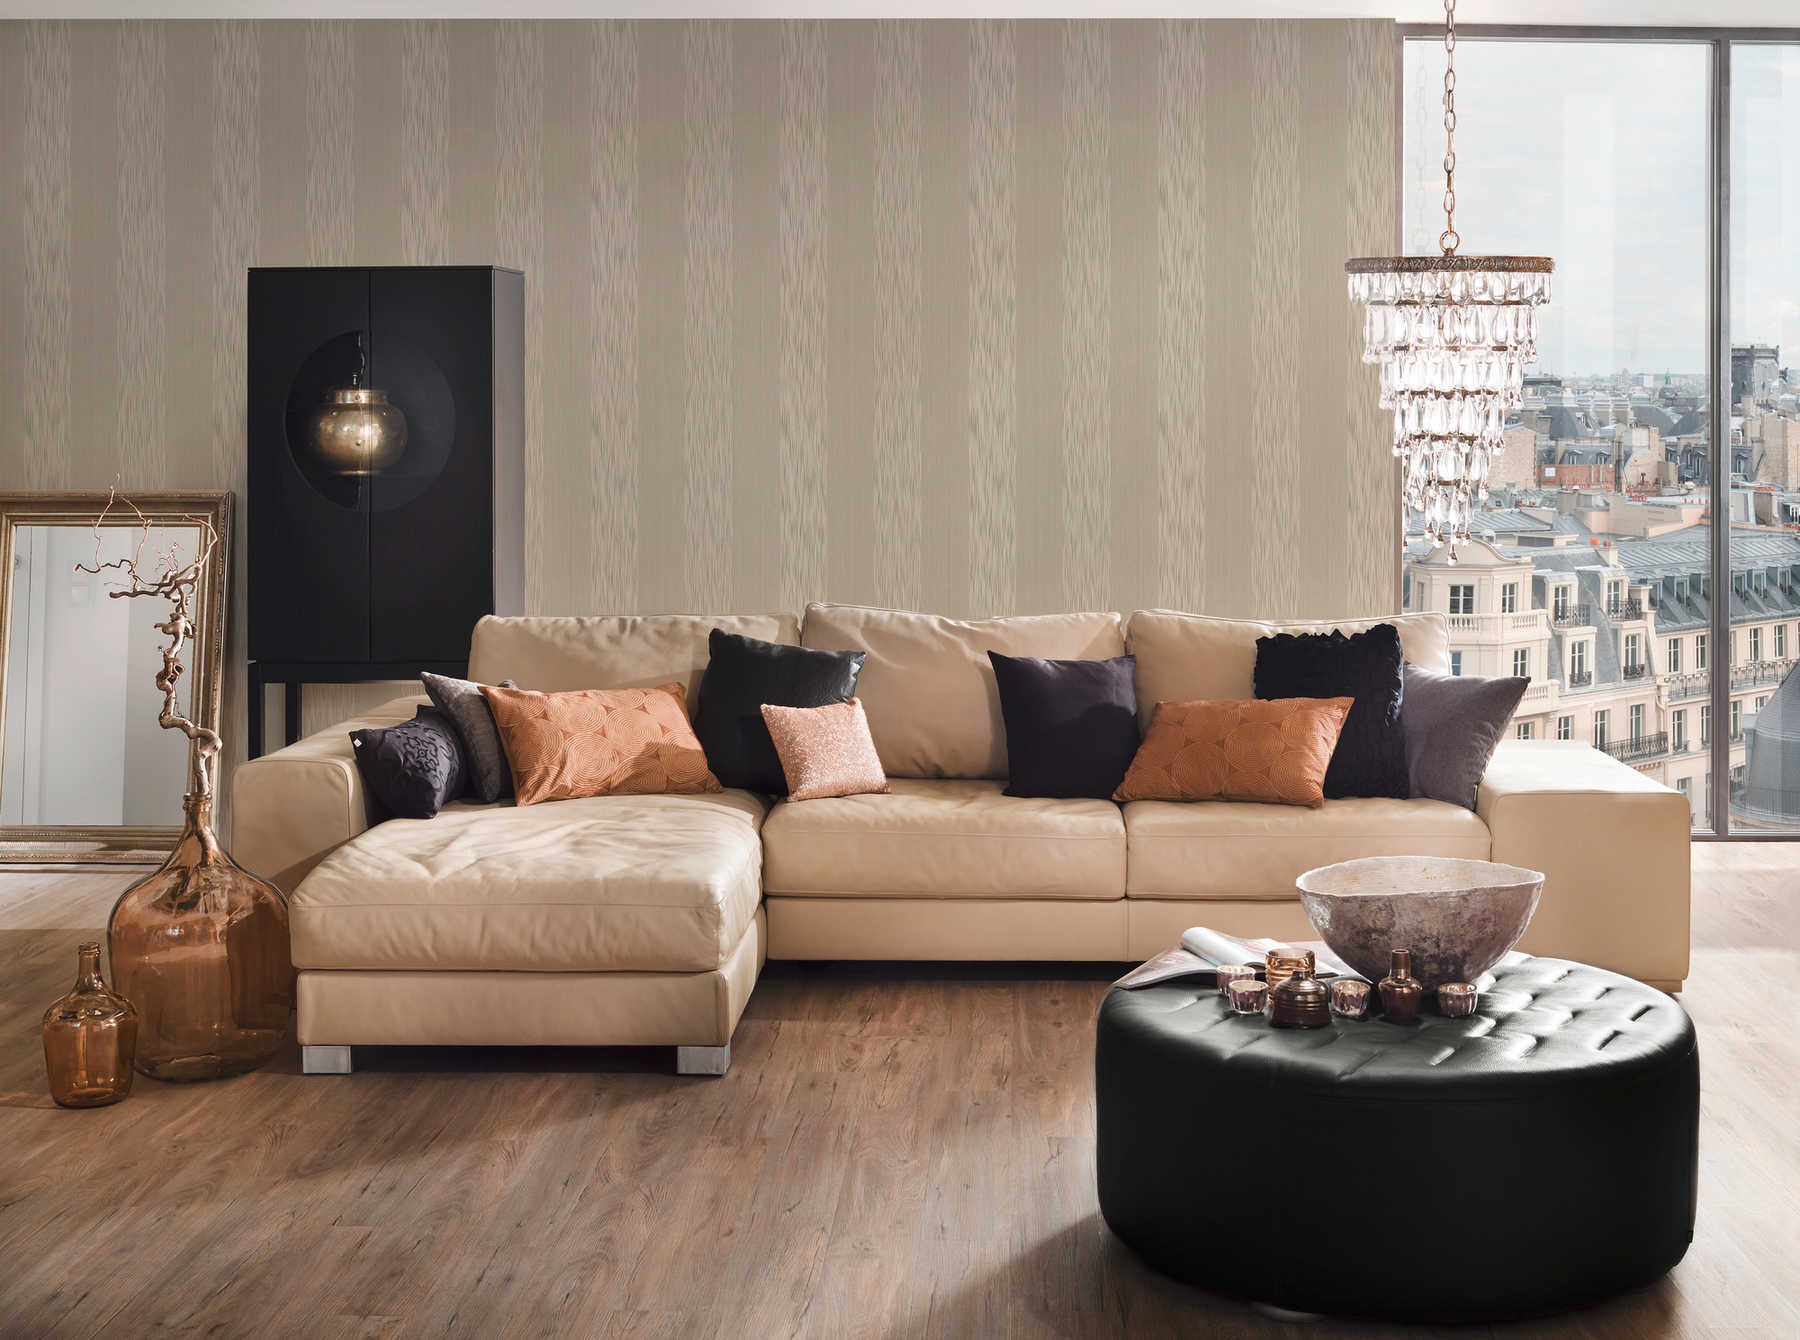             Non-woven wallpaper with textile texture & tone-on-tone stripe pattern - beige
        